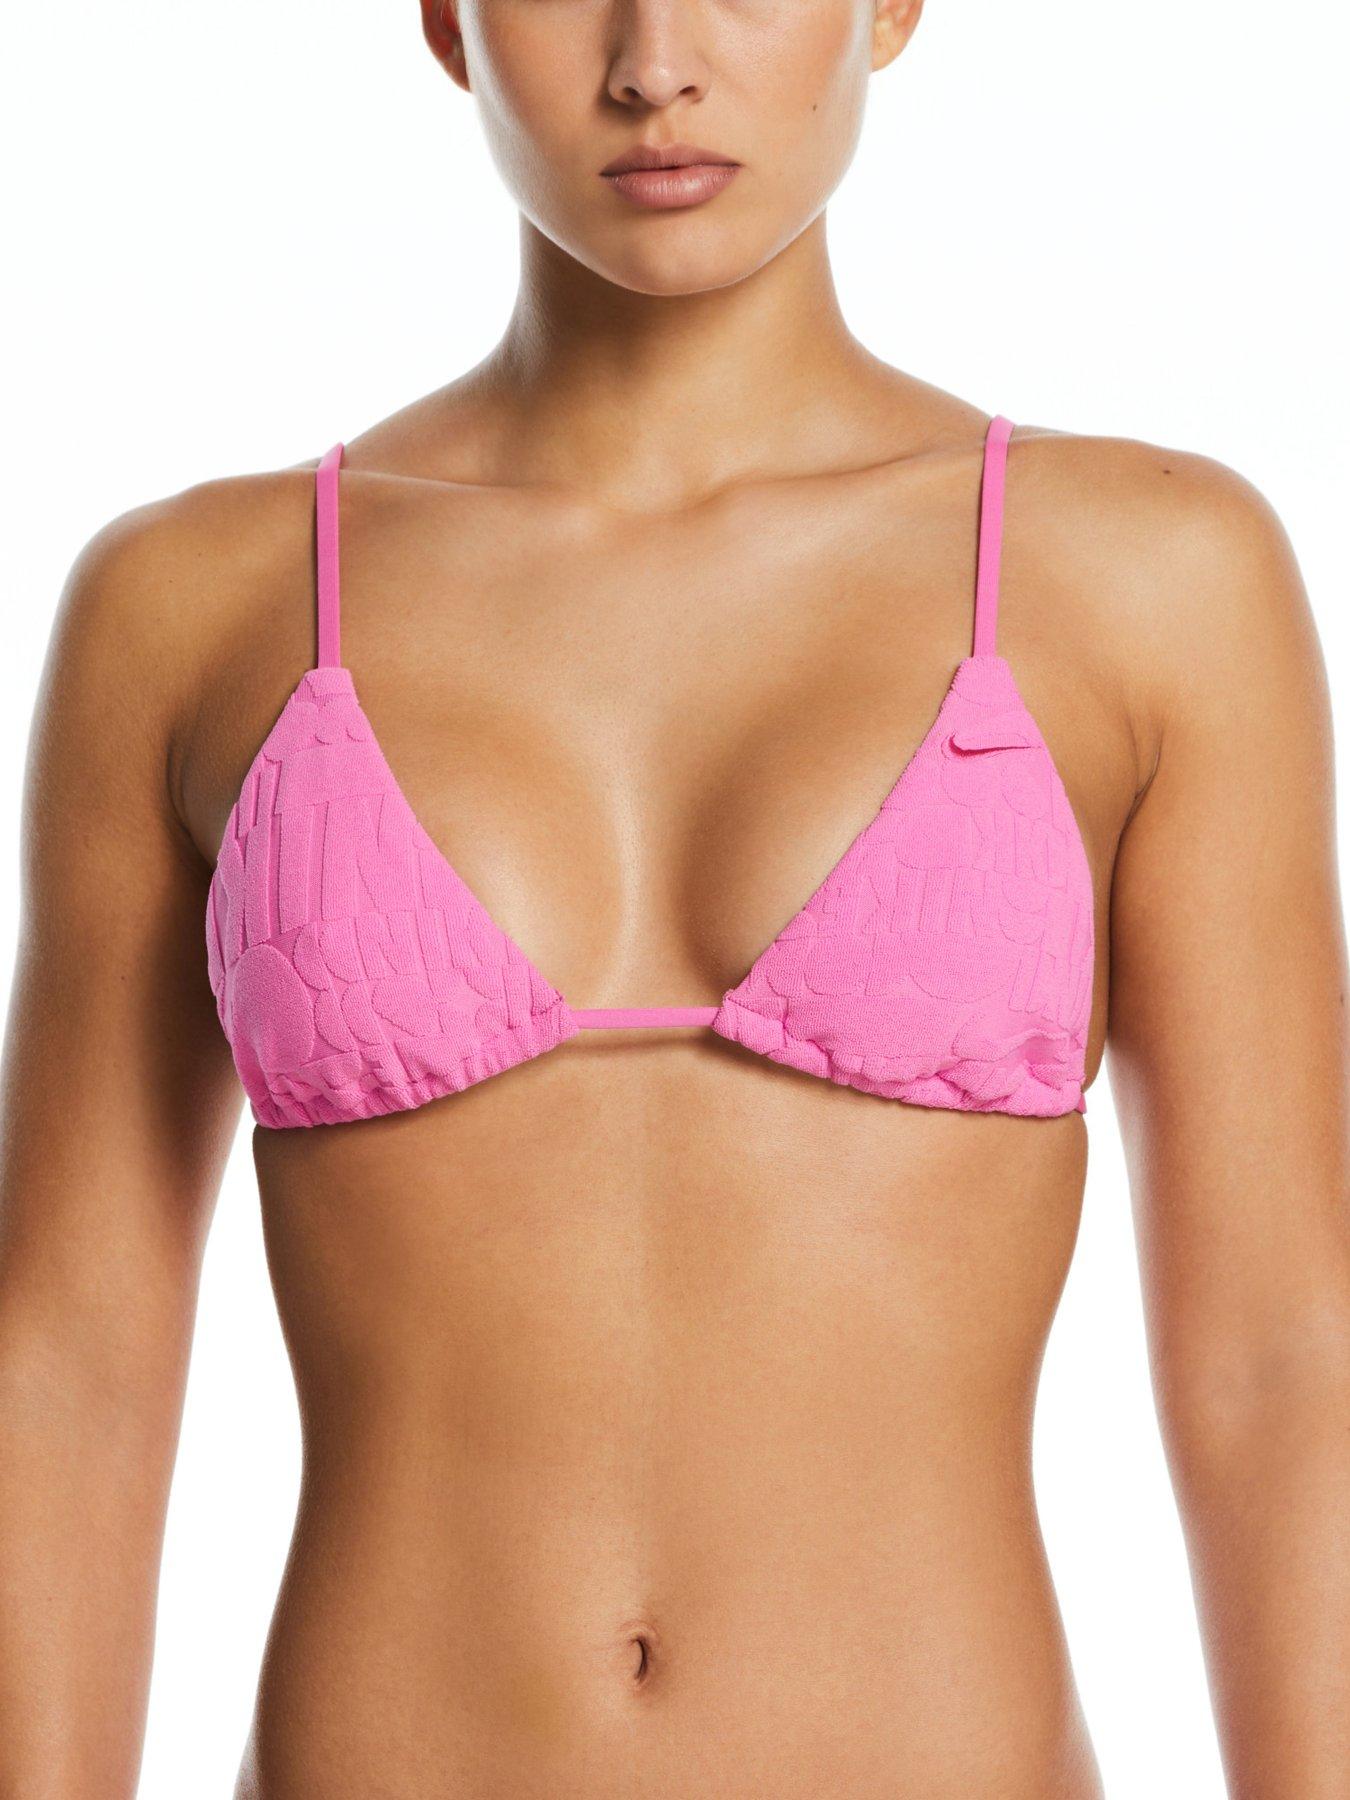 Nike Women's Retro Flow Icon Terry Bikini Top-Pink, Pink, Size M, Women